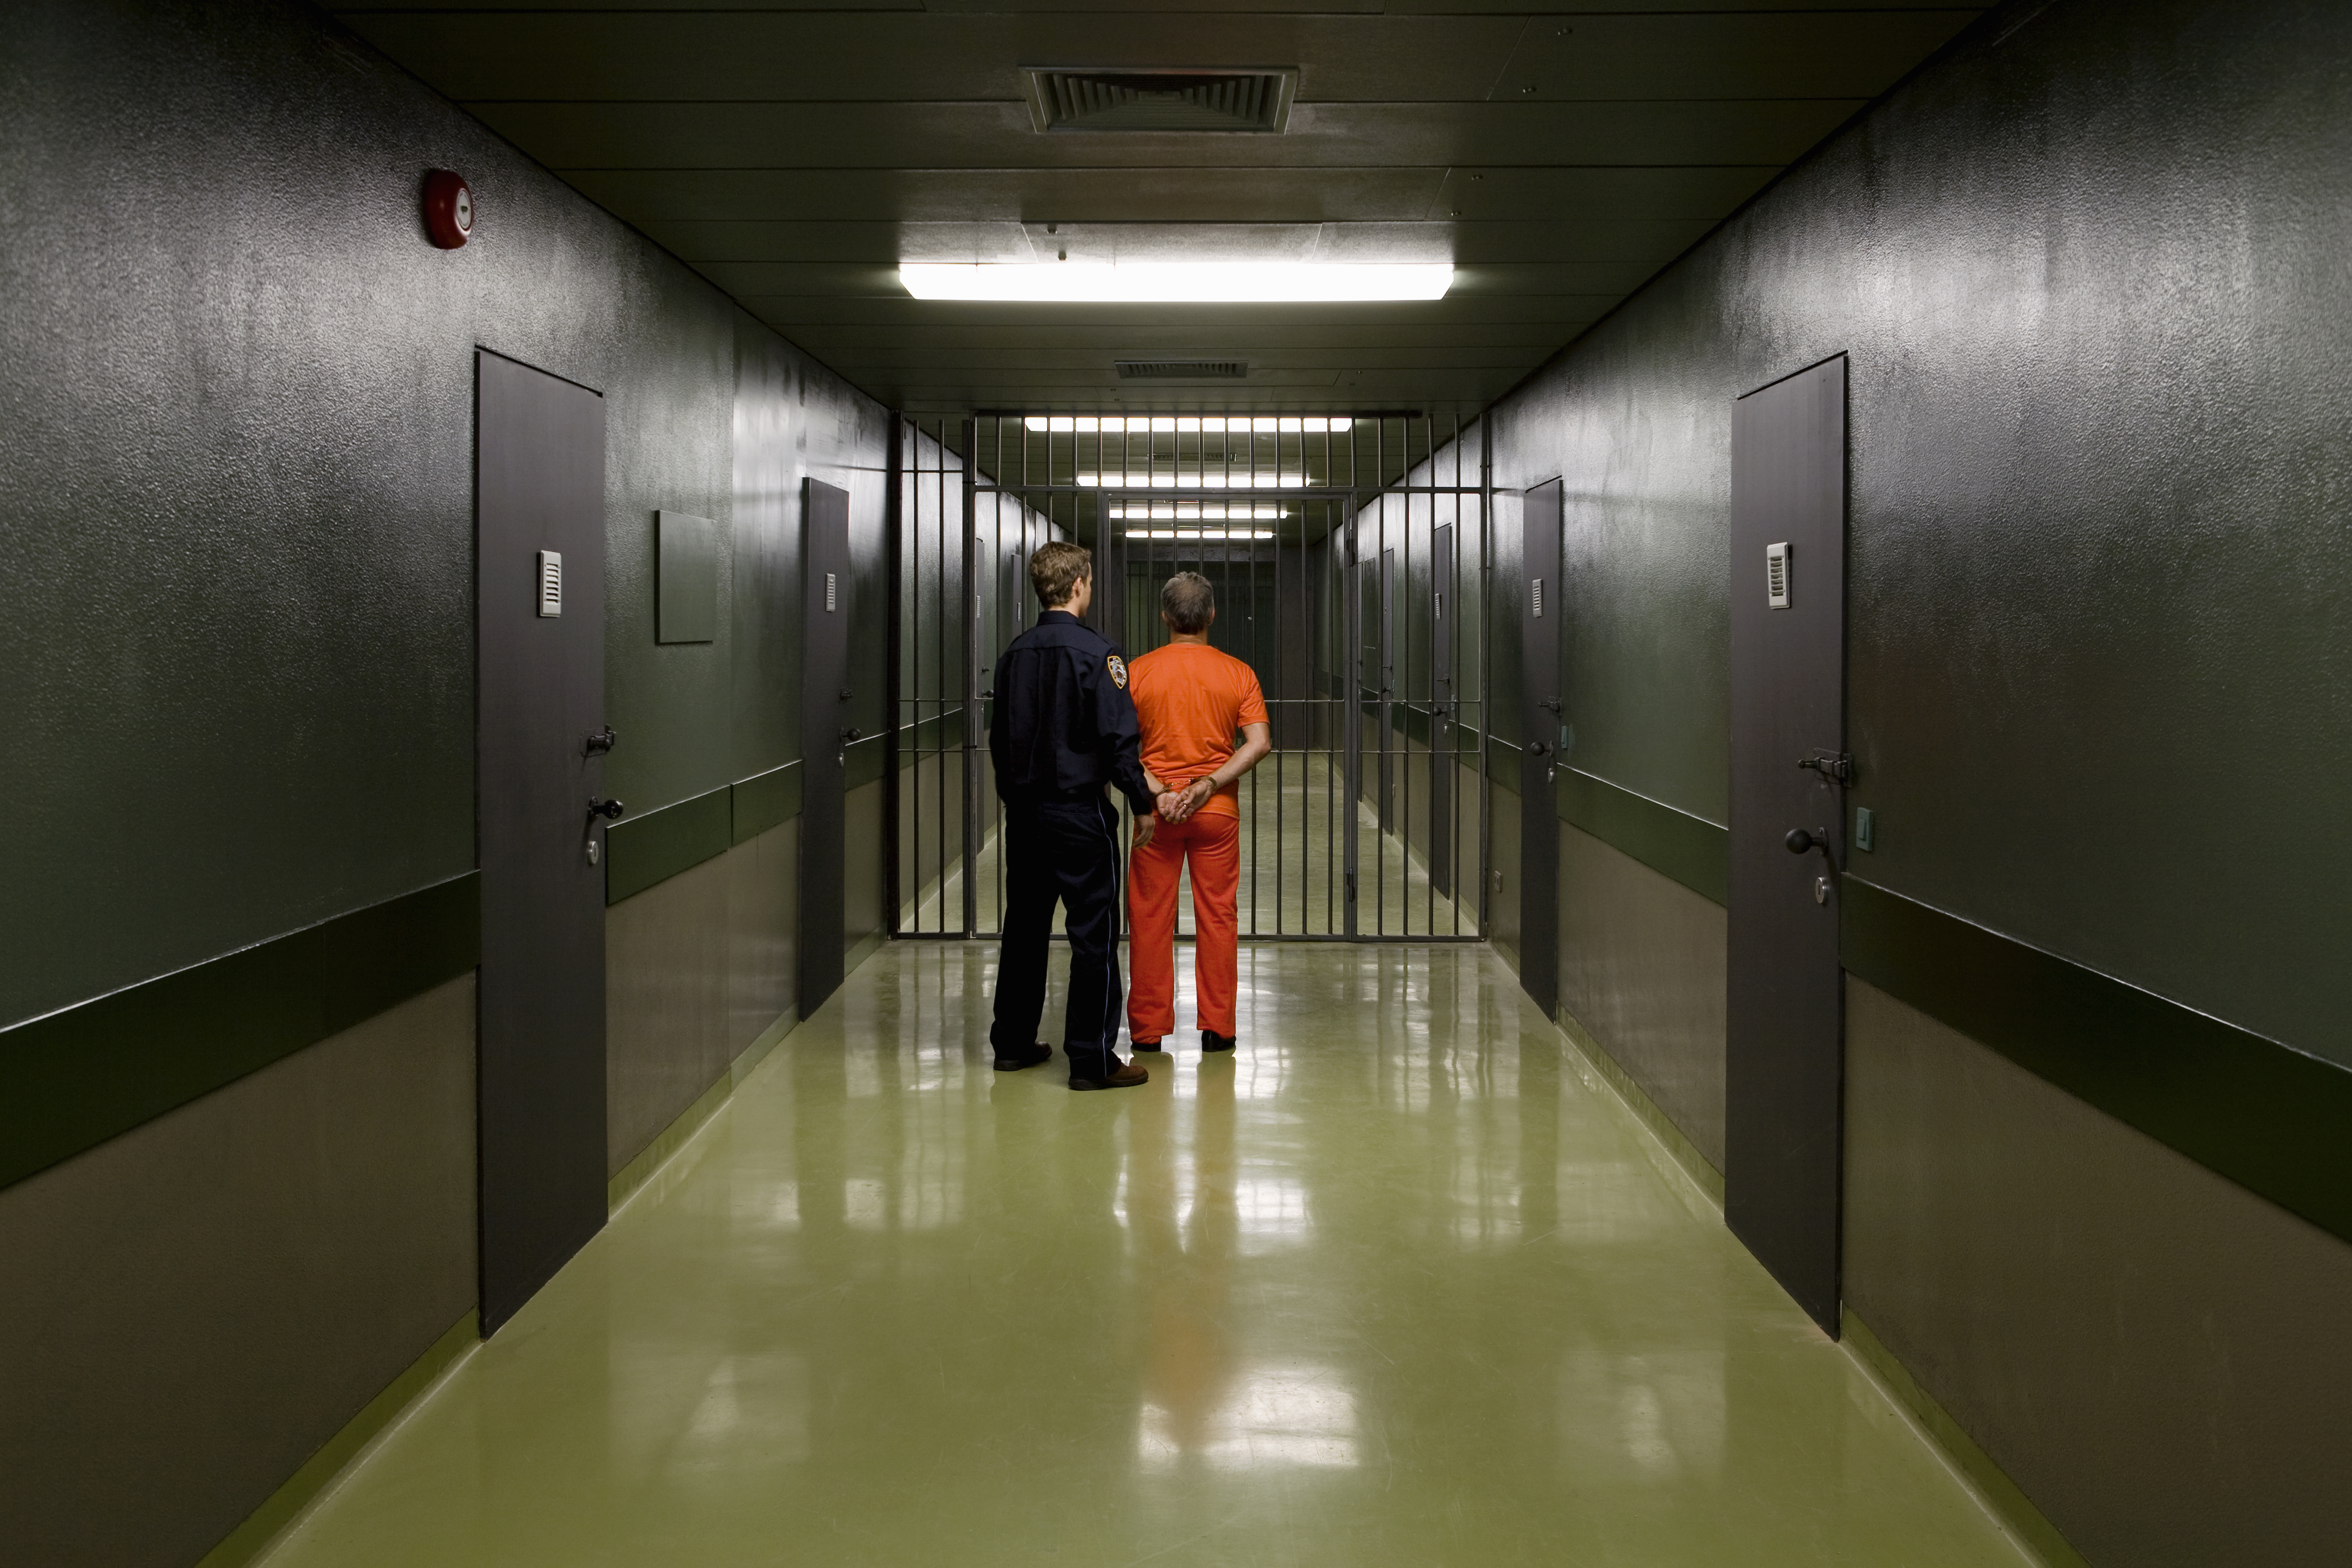 A prison guard leading a prisoner | Source: Getty Images